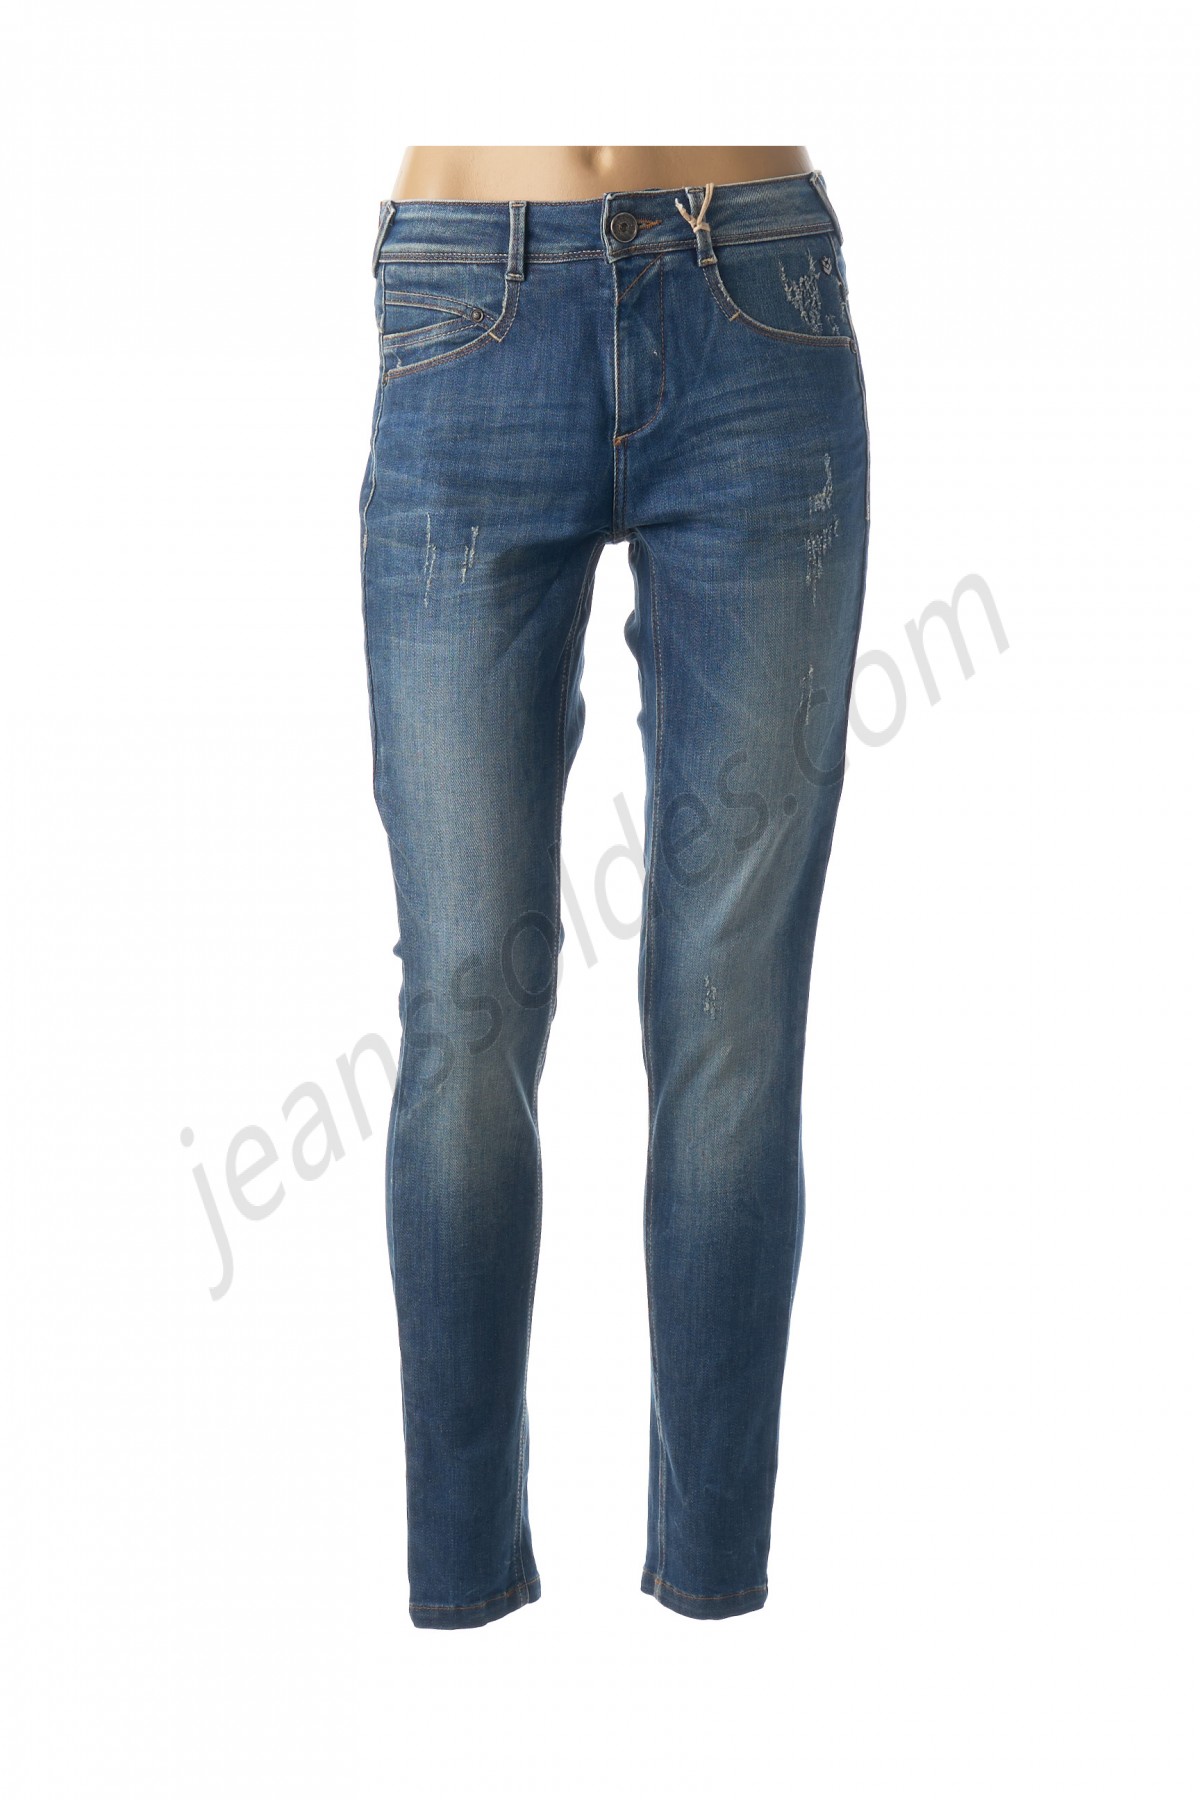 freeman t.porter-Jeans coupe slim prix d’amis - -0